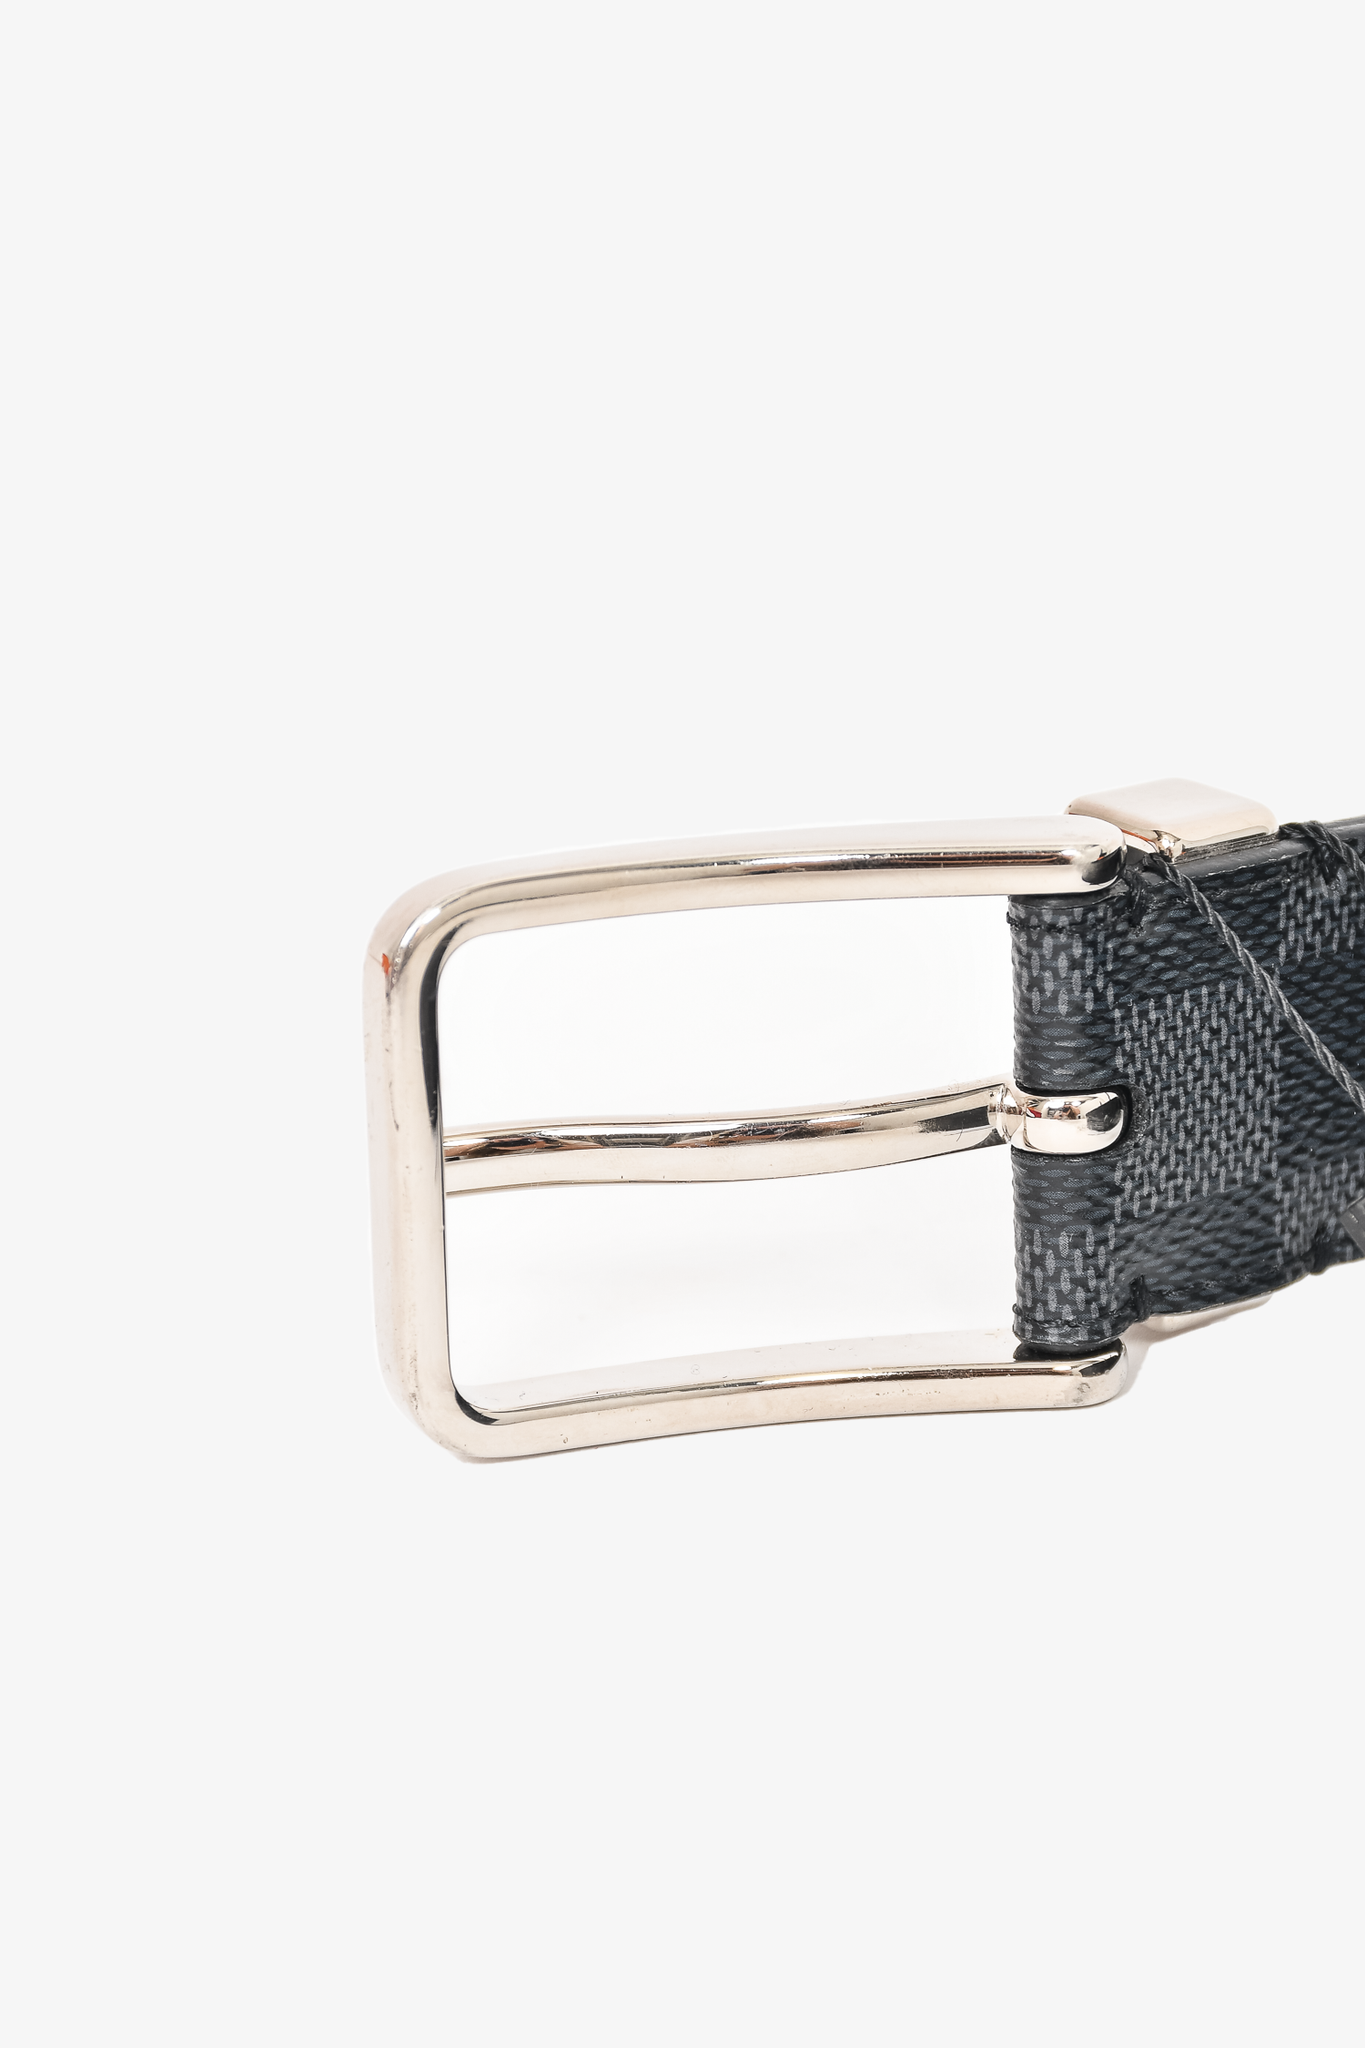 Louis+Vuitton+Damier+Azur+Belt+Size+110%2F44+40mm+Buckle+100+